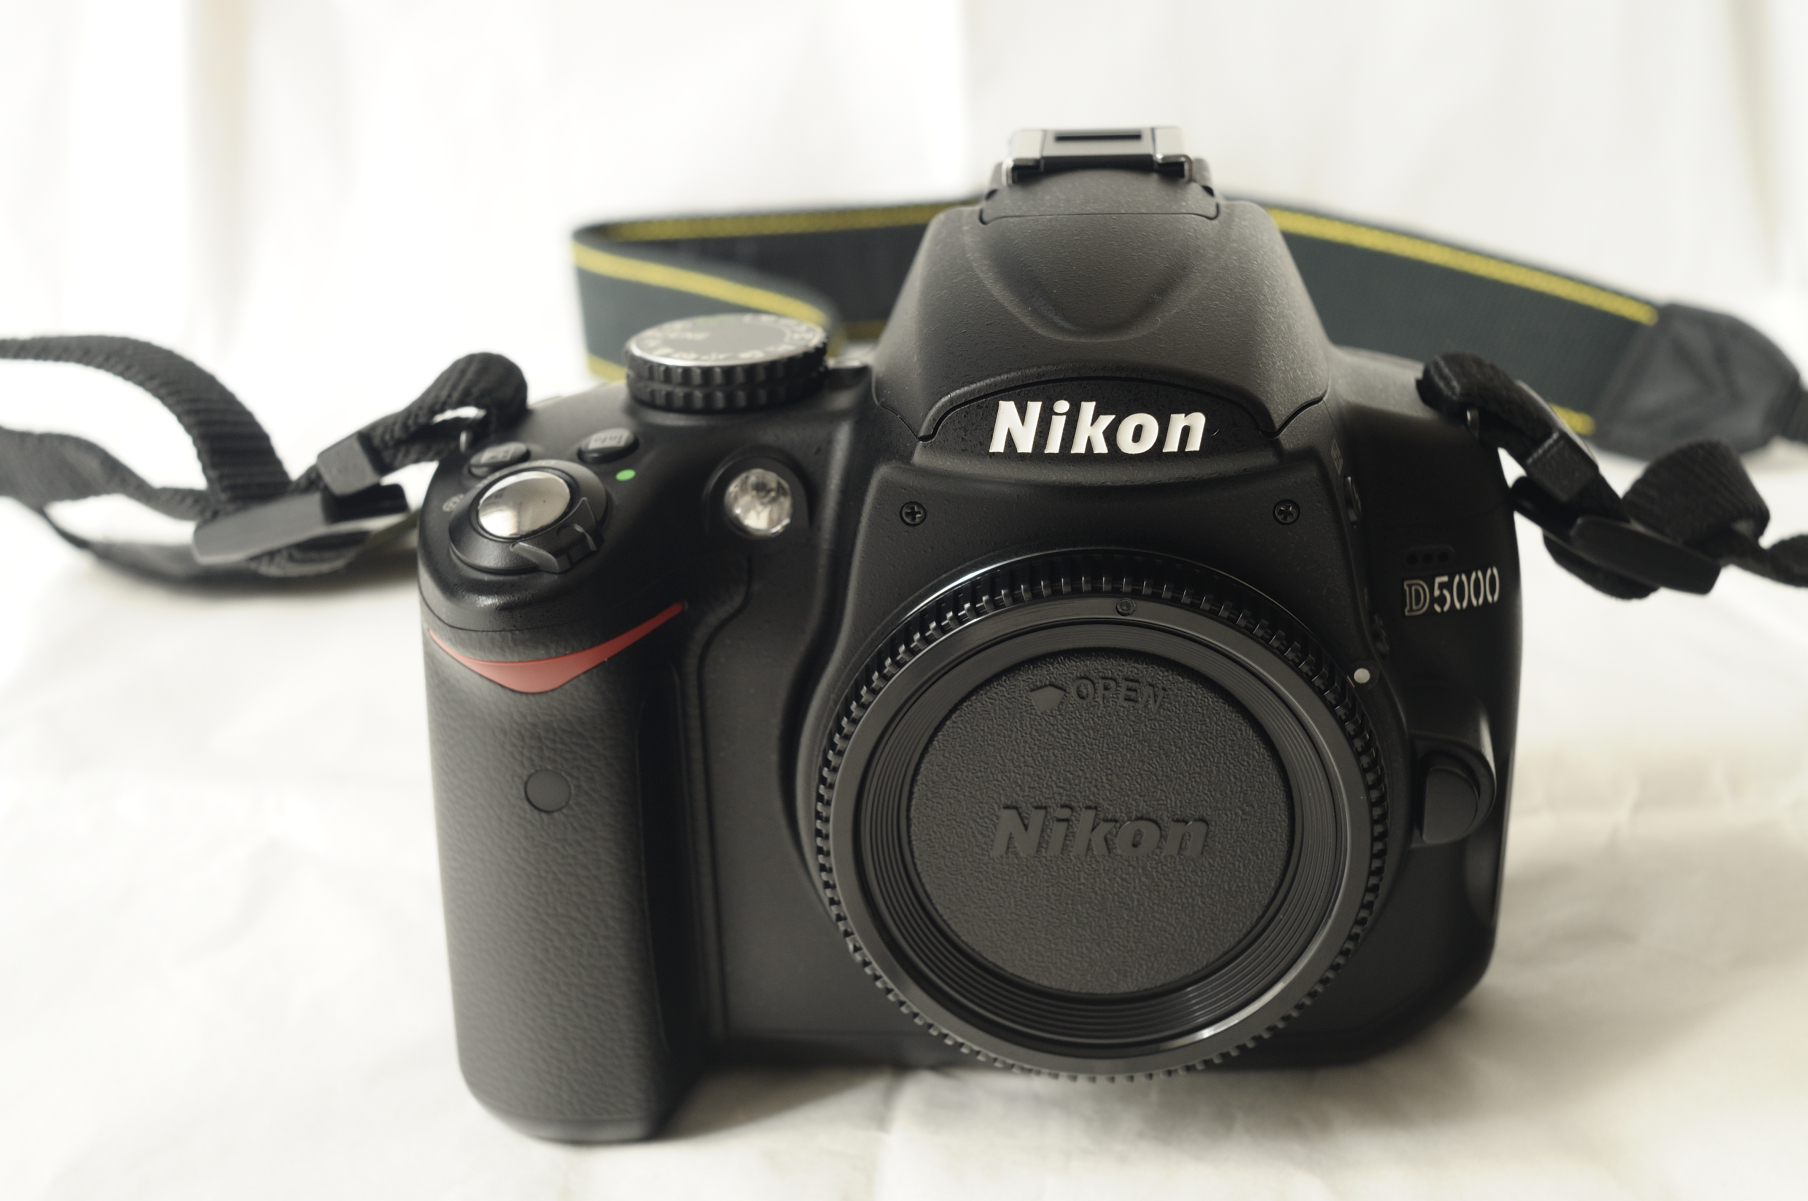 File:Nikon D5000 body (front).jpg - Wikimedia Commons